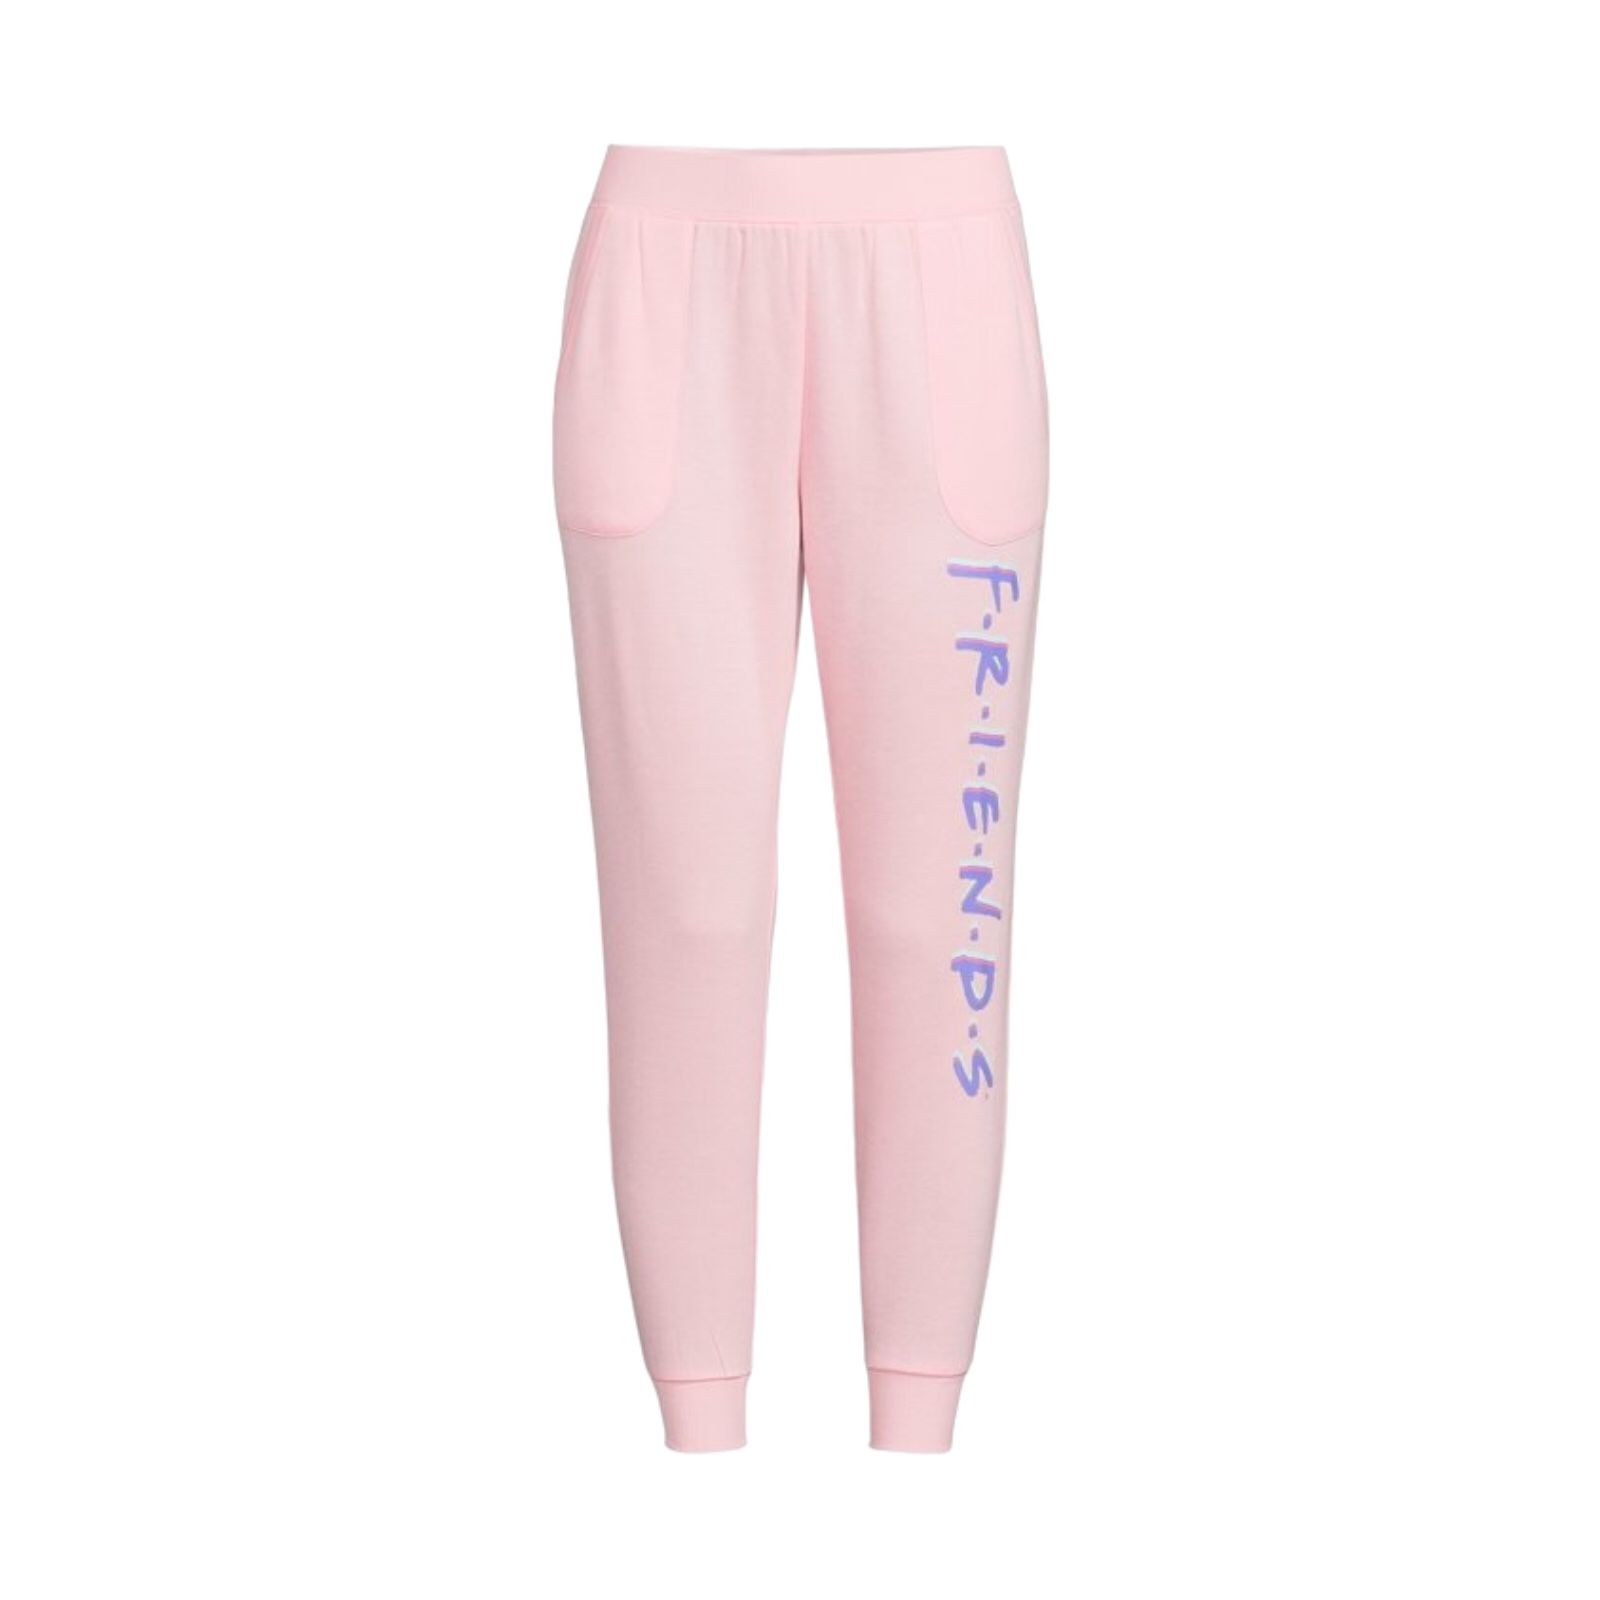 Warner Bros. Women's Friends Pink Jogger Pajama Pants - Size Medium NWOT